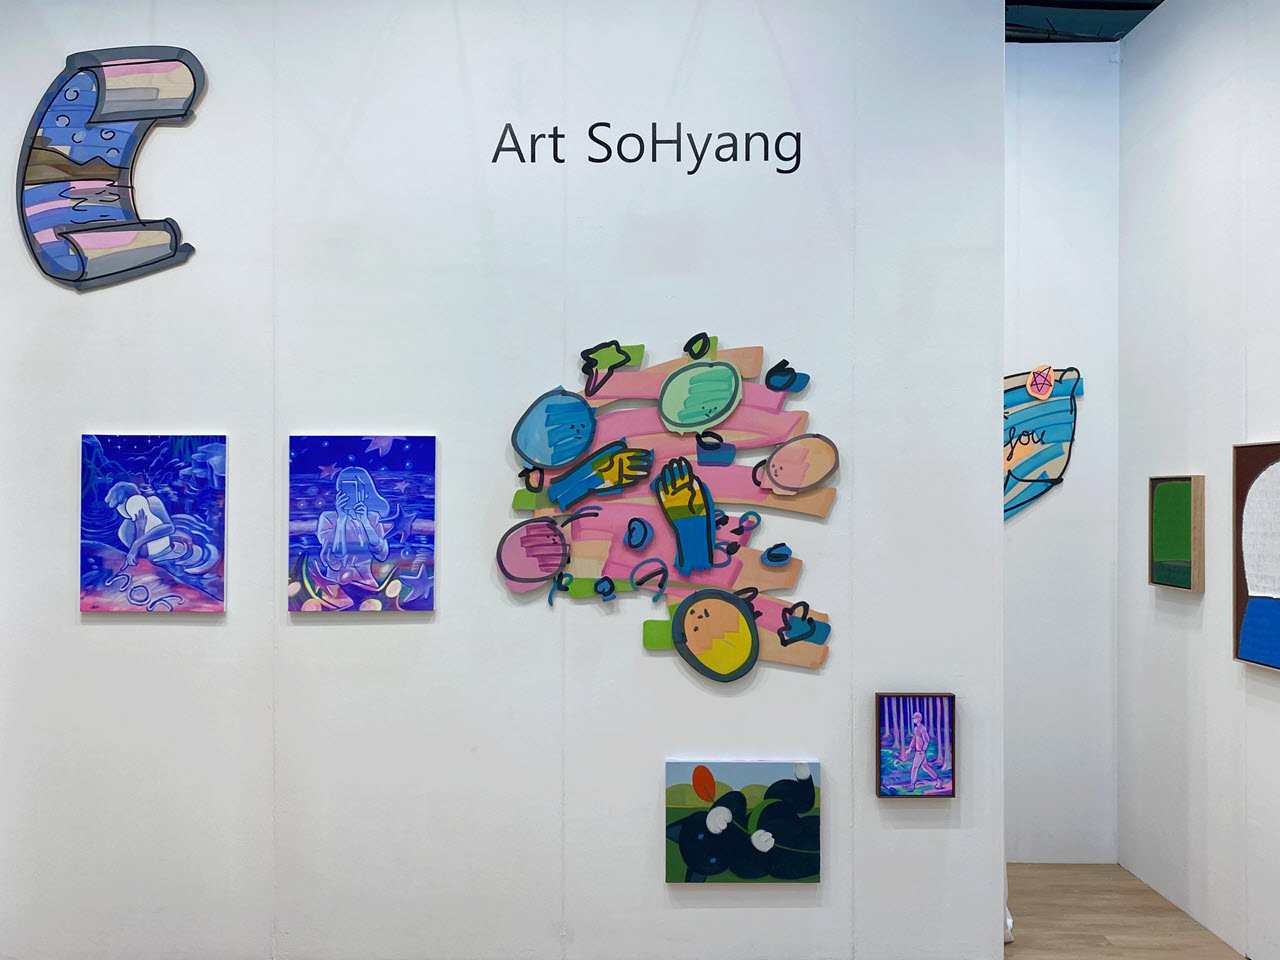 2022 Korea Galleries Art Fair